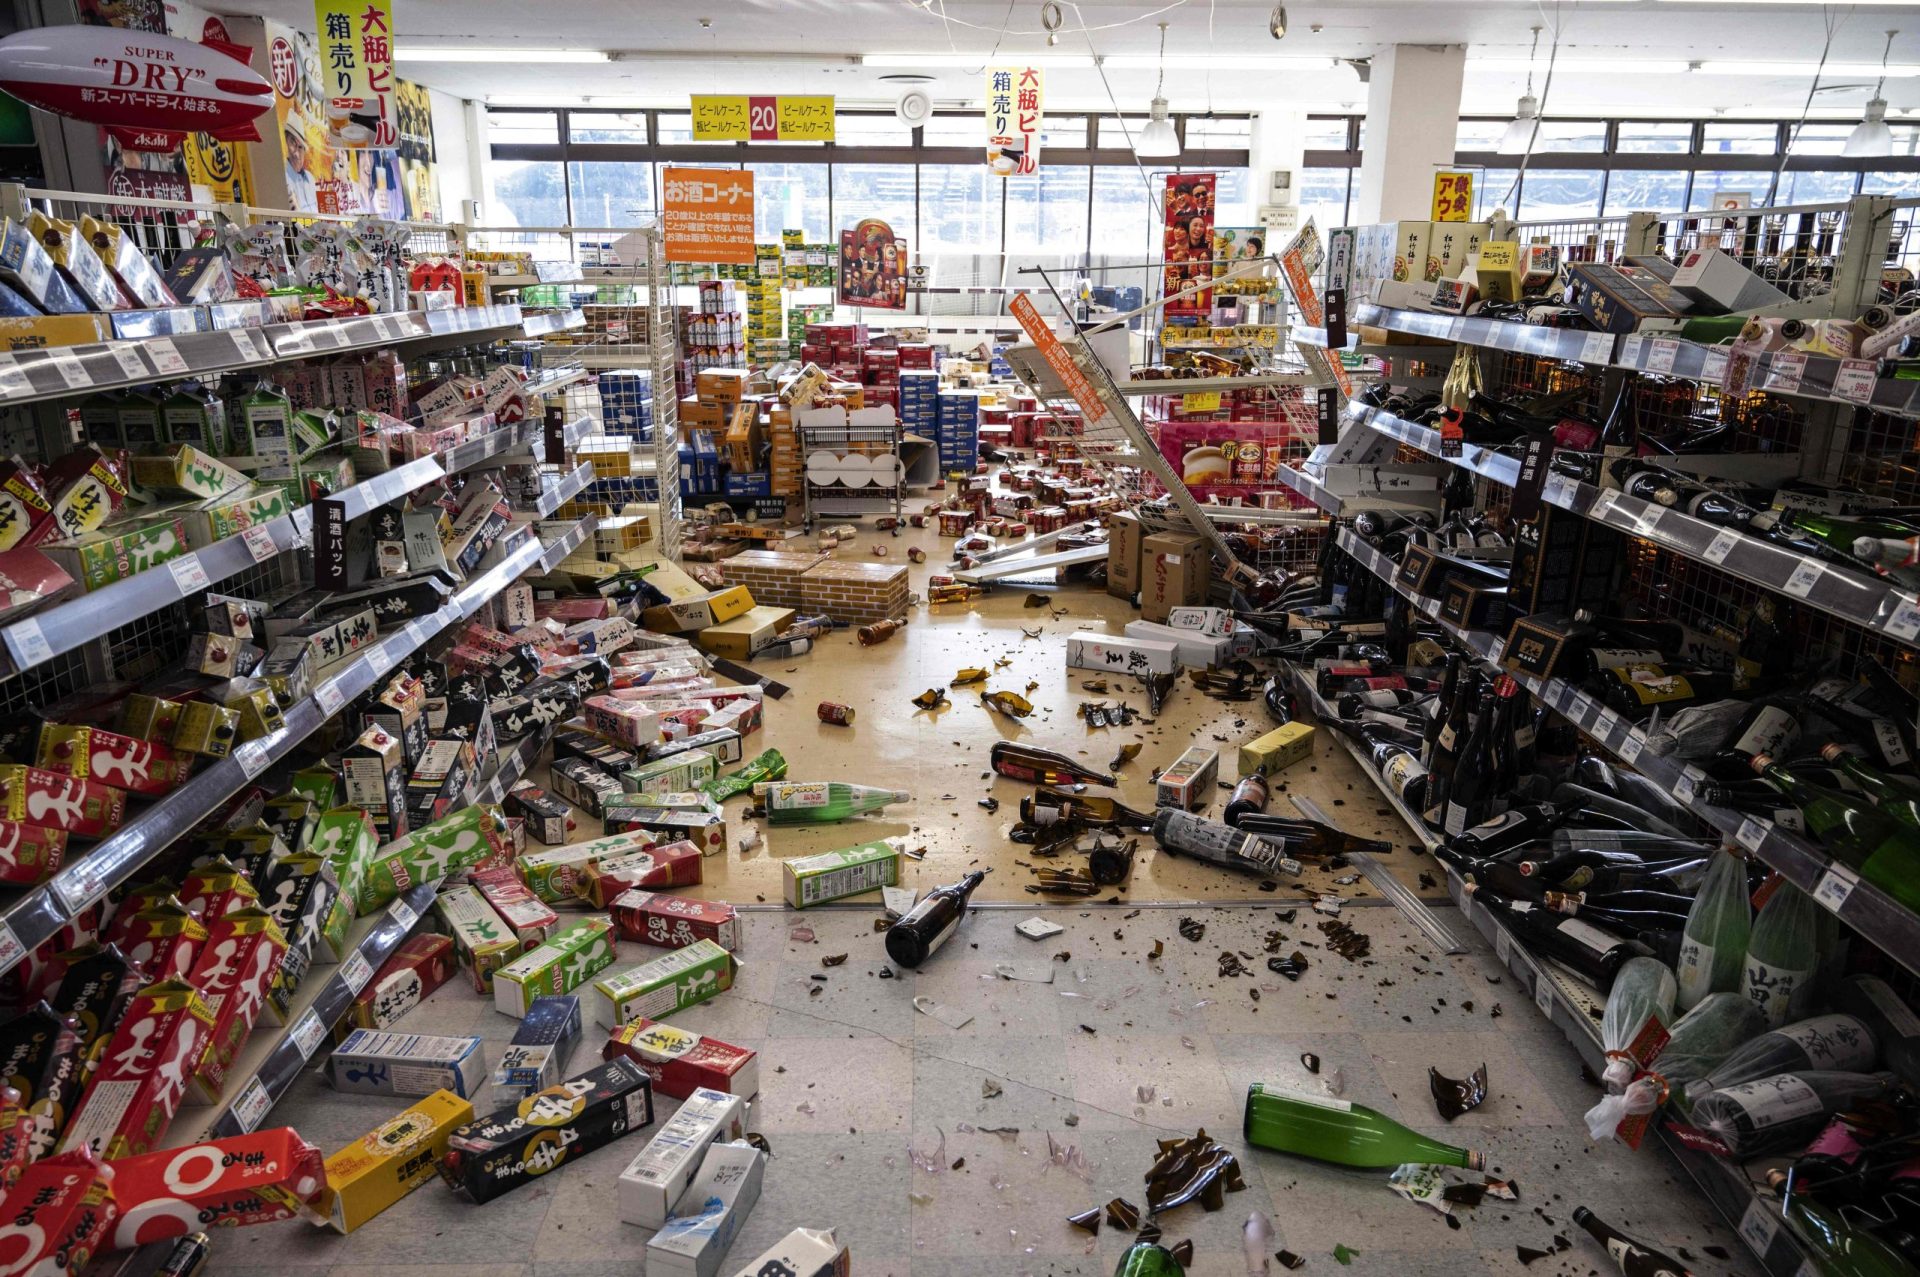 Sismo de magnitude 7.3 abala Nordeste do Japão